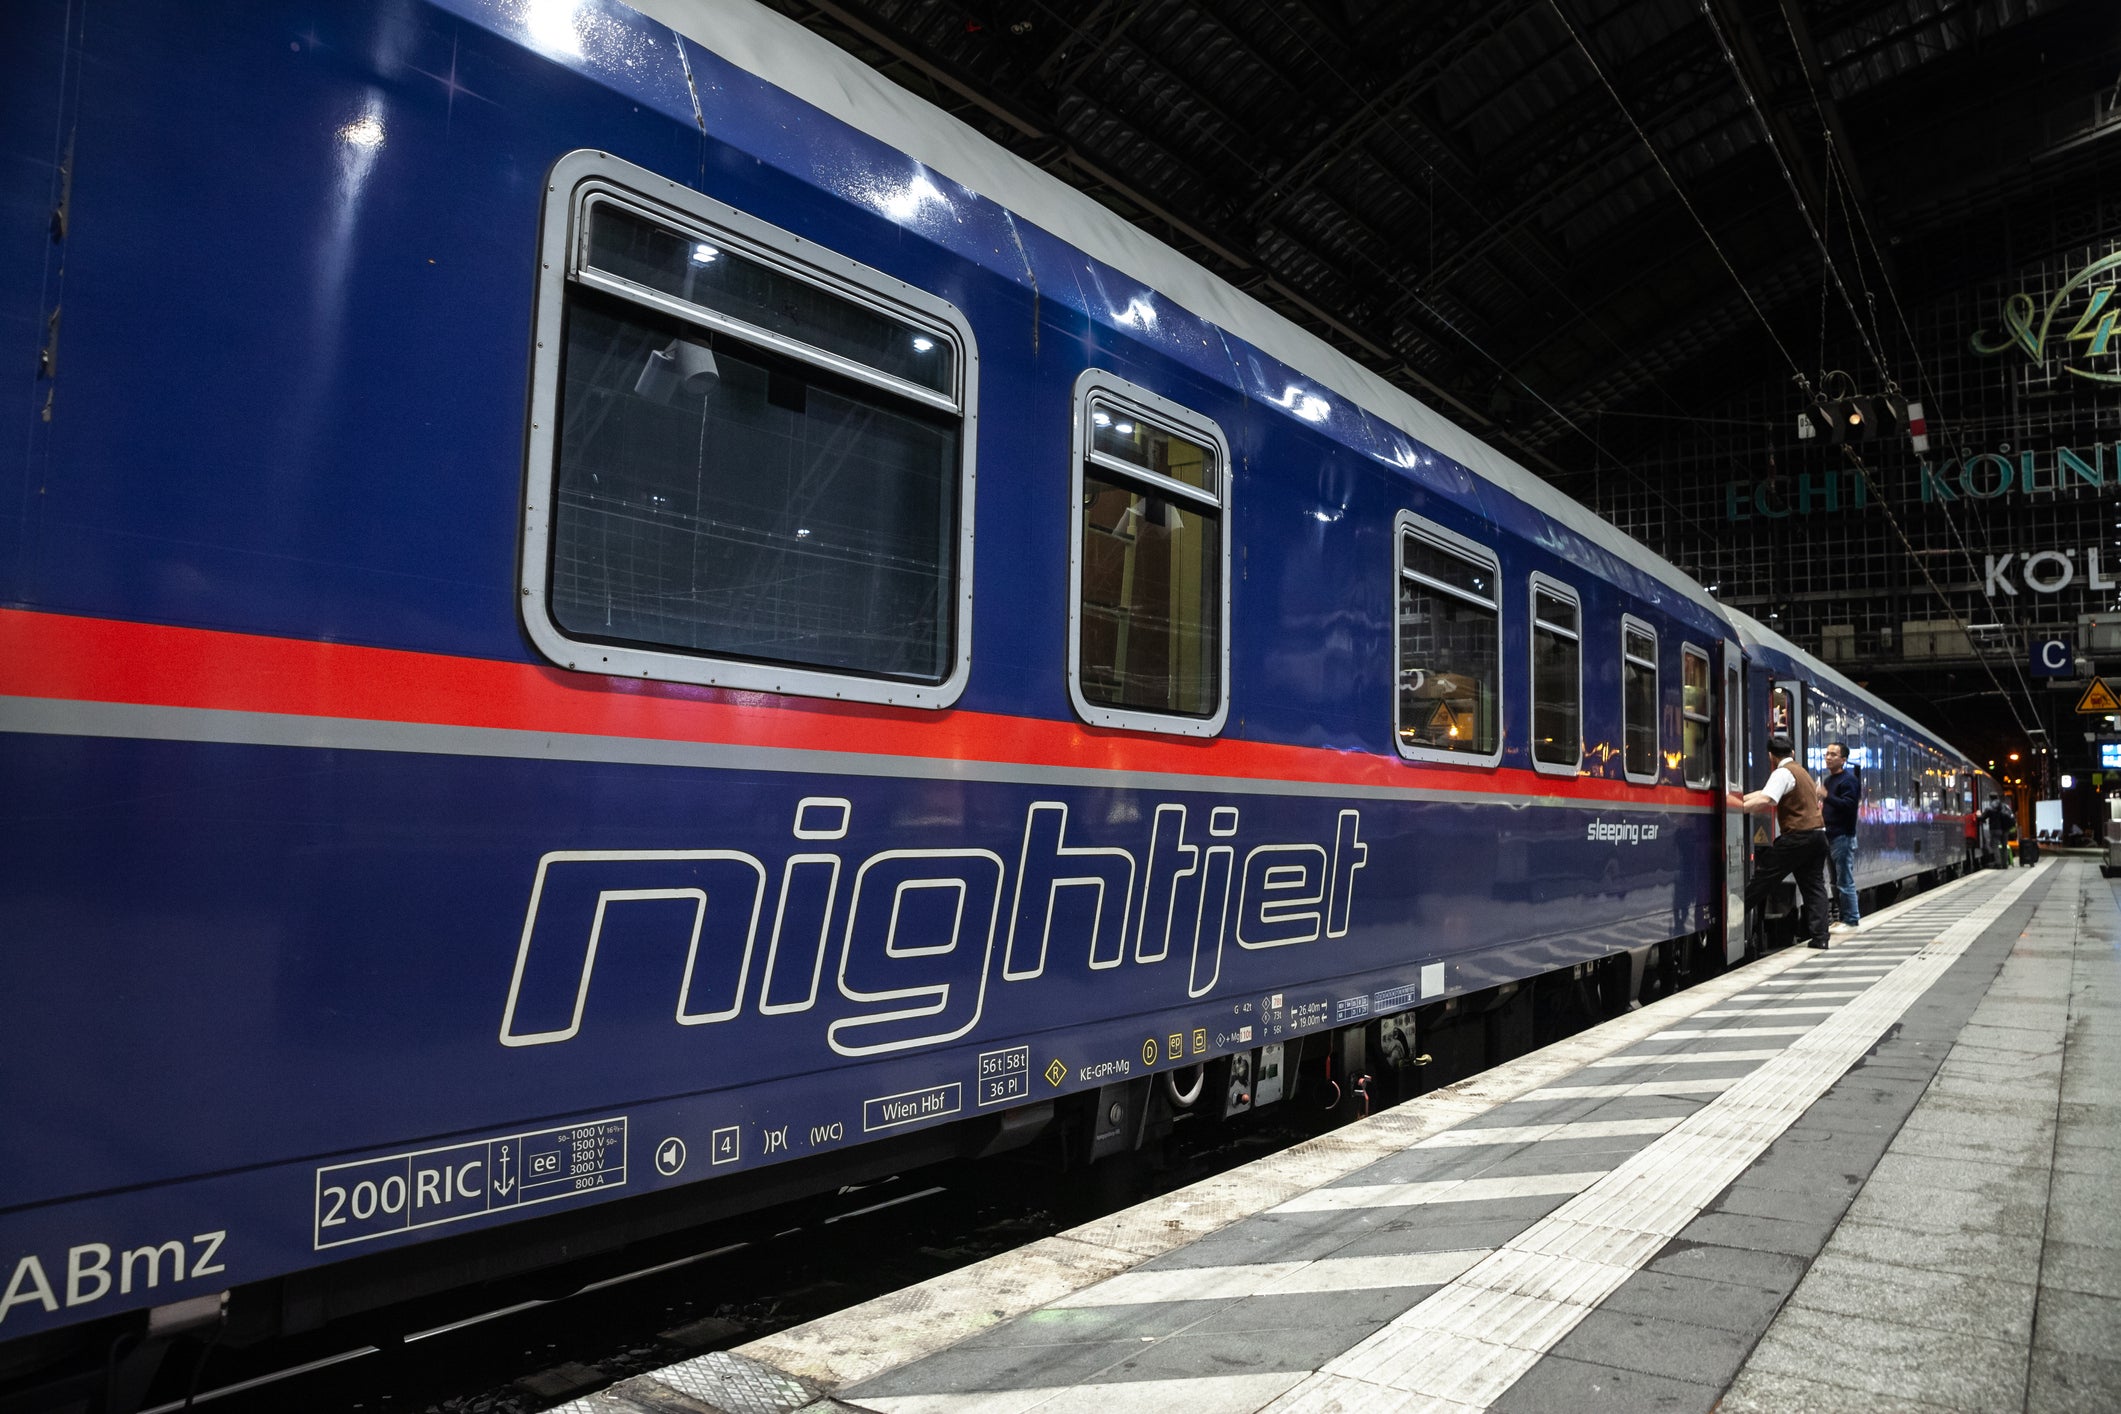 Overnight train amsterdam innsbruck, operated by Night Jet. 